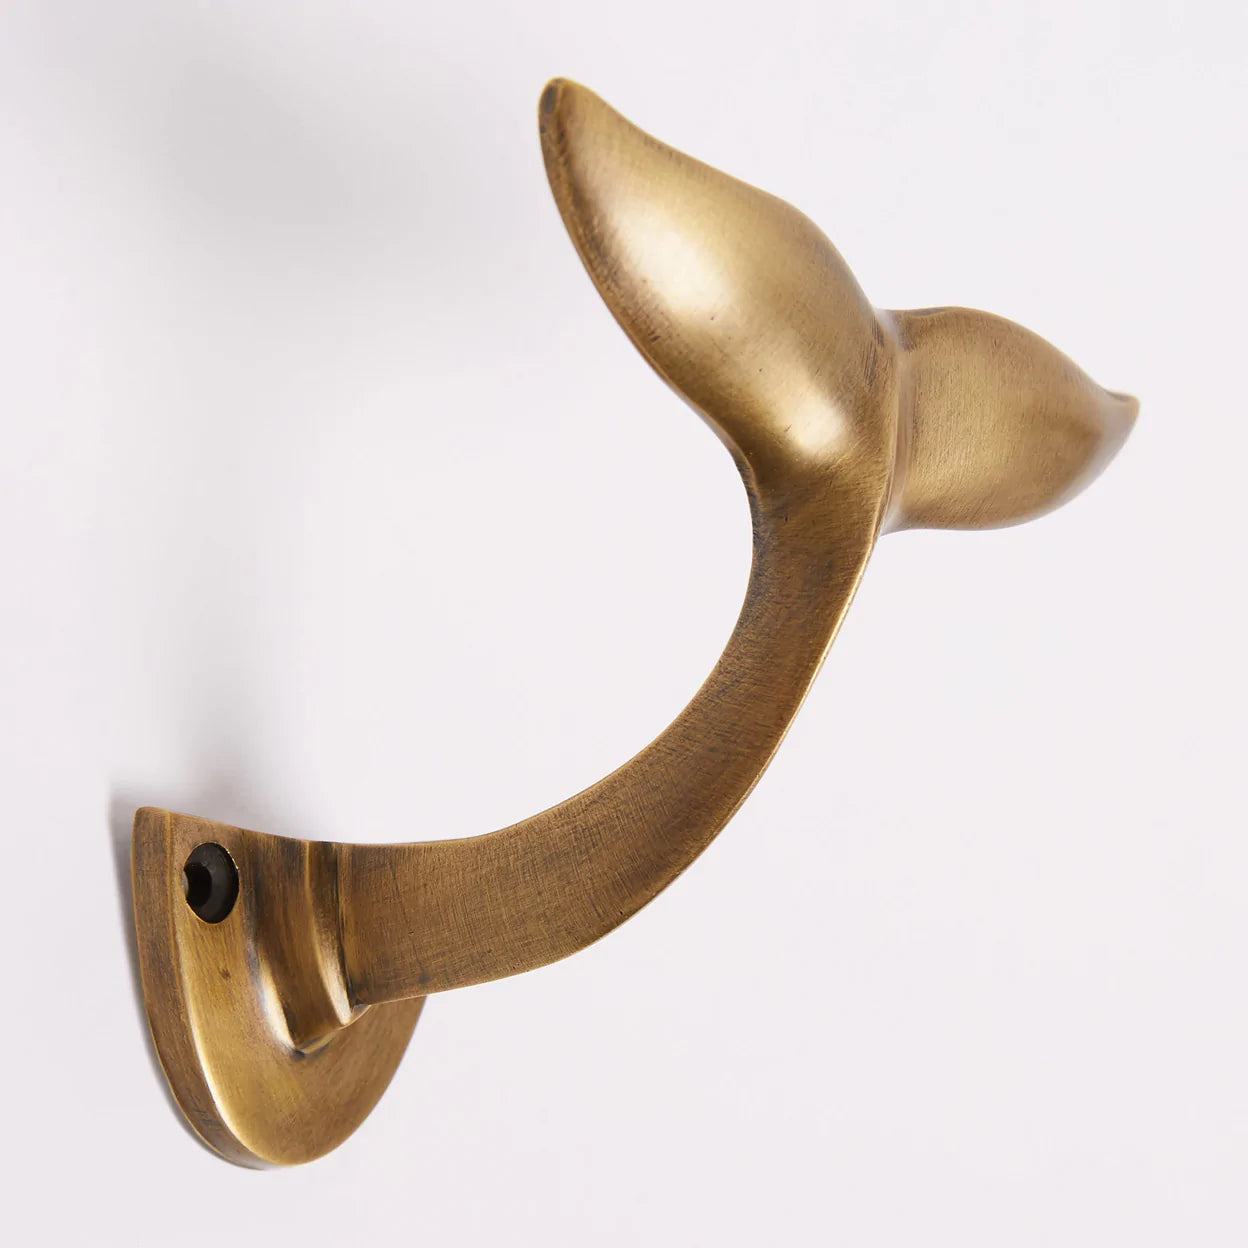 Hepburn Hardware Whale Tail Hook - Acid Washed Brass